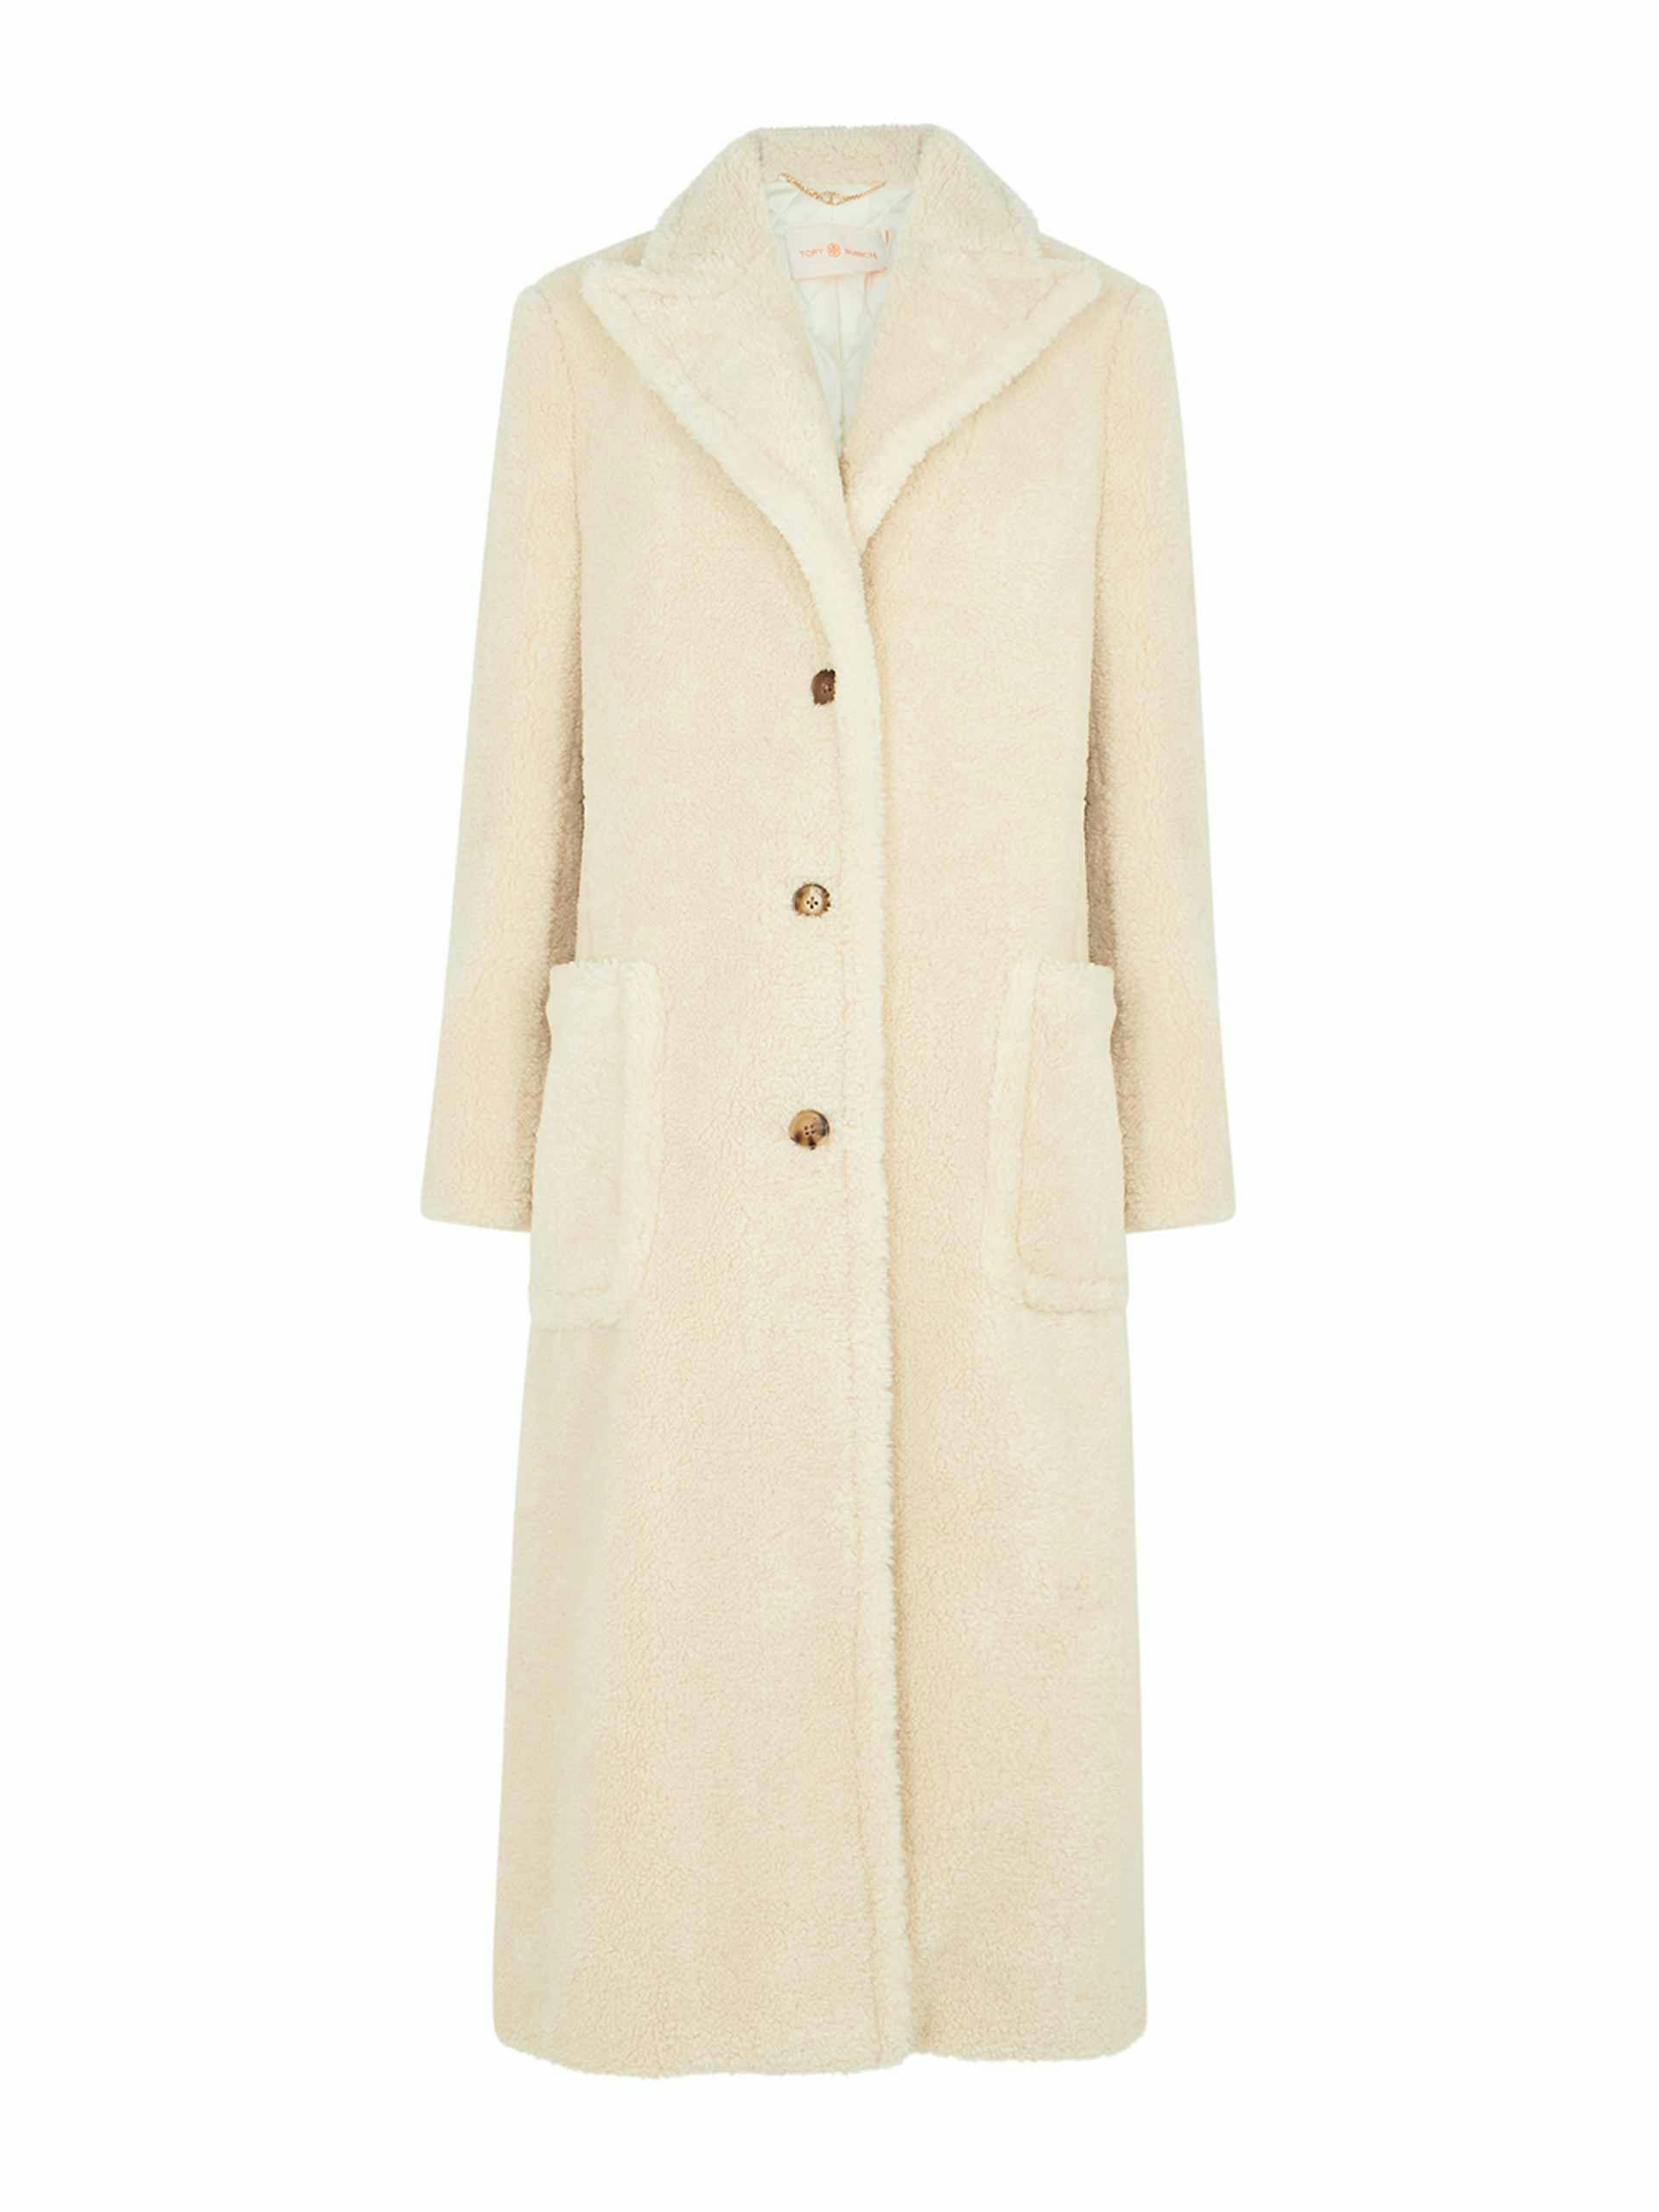 Cream faux shearling coat